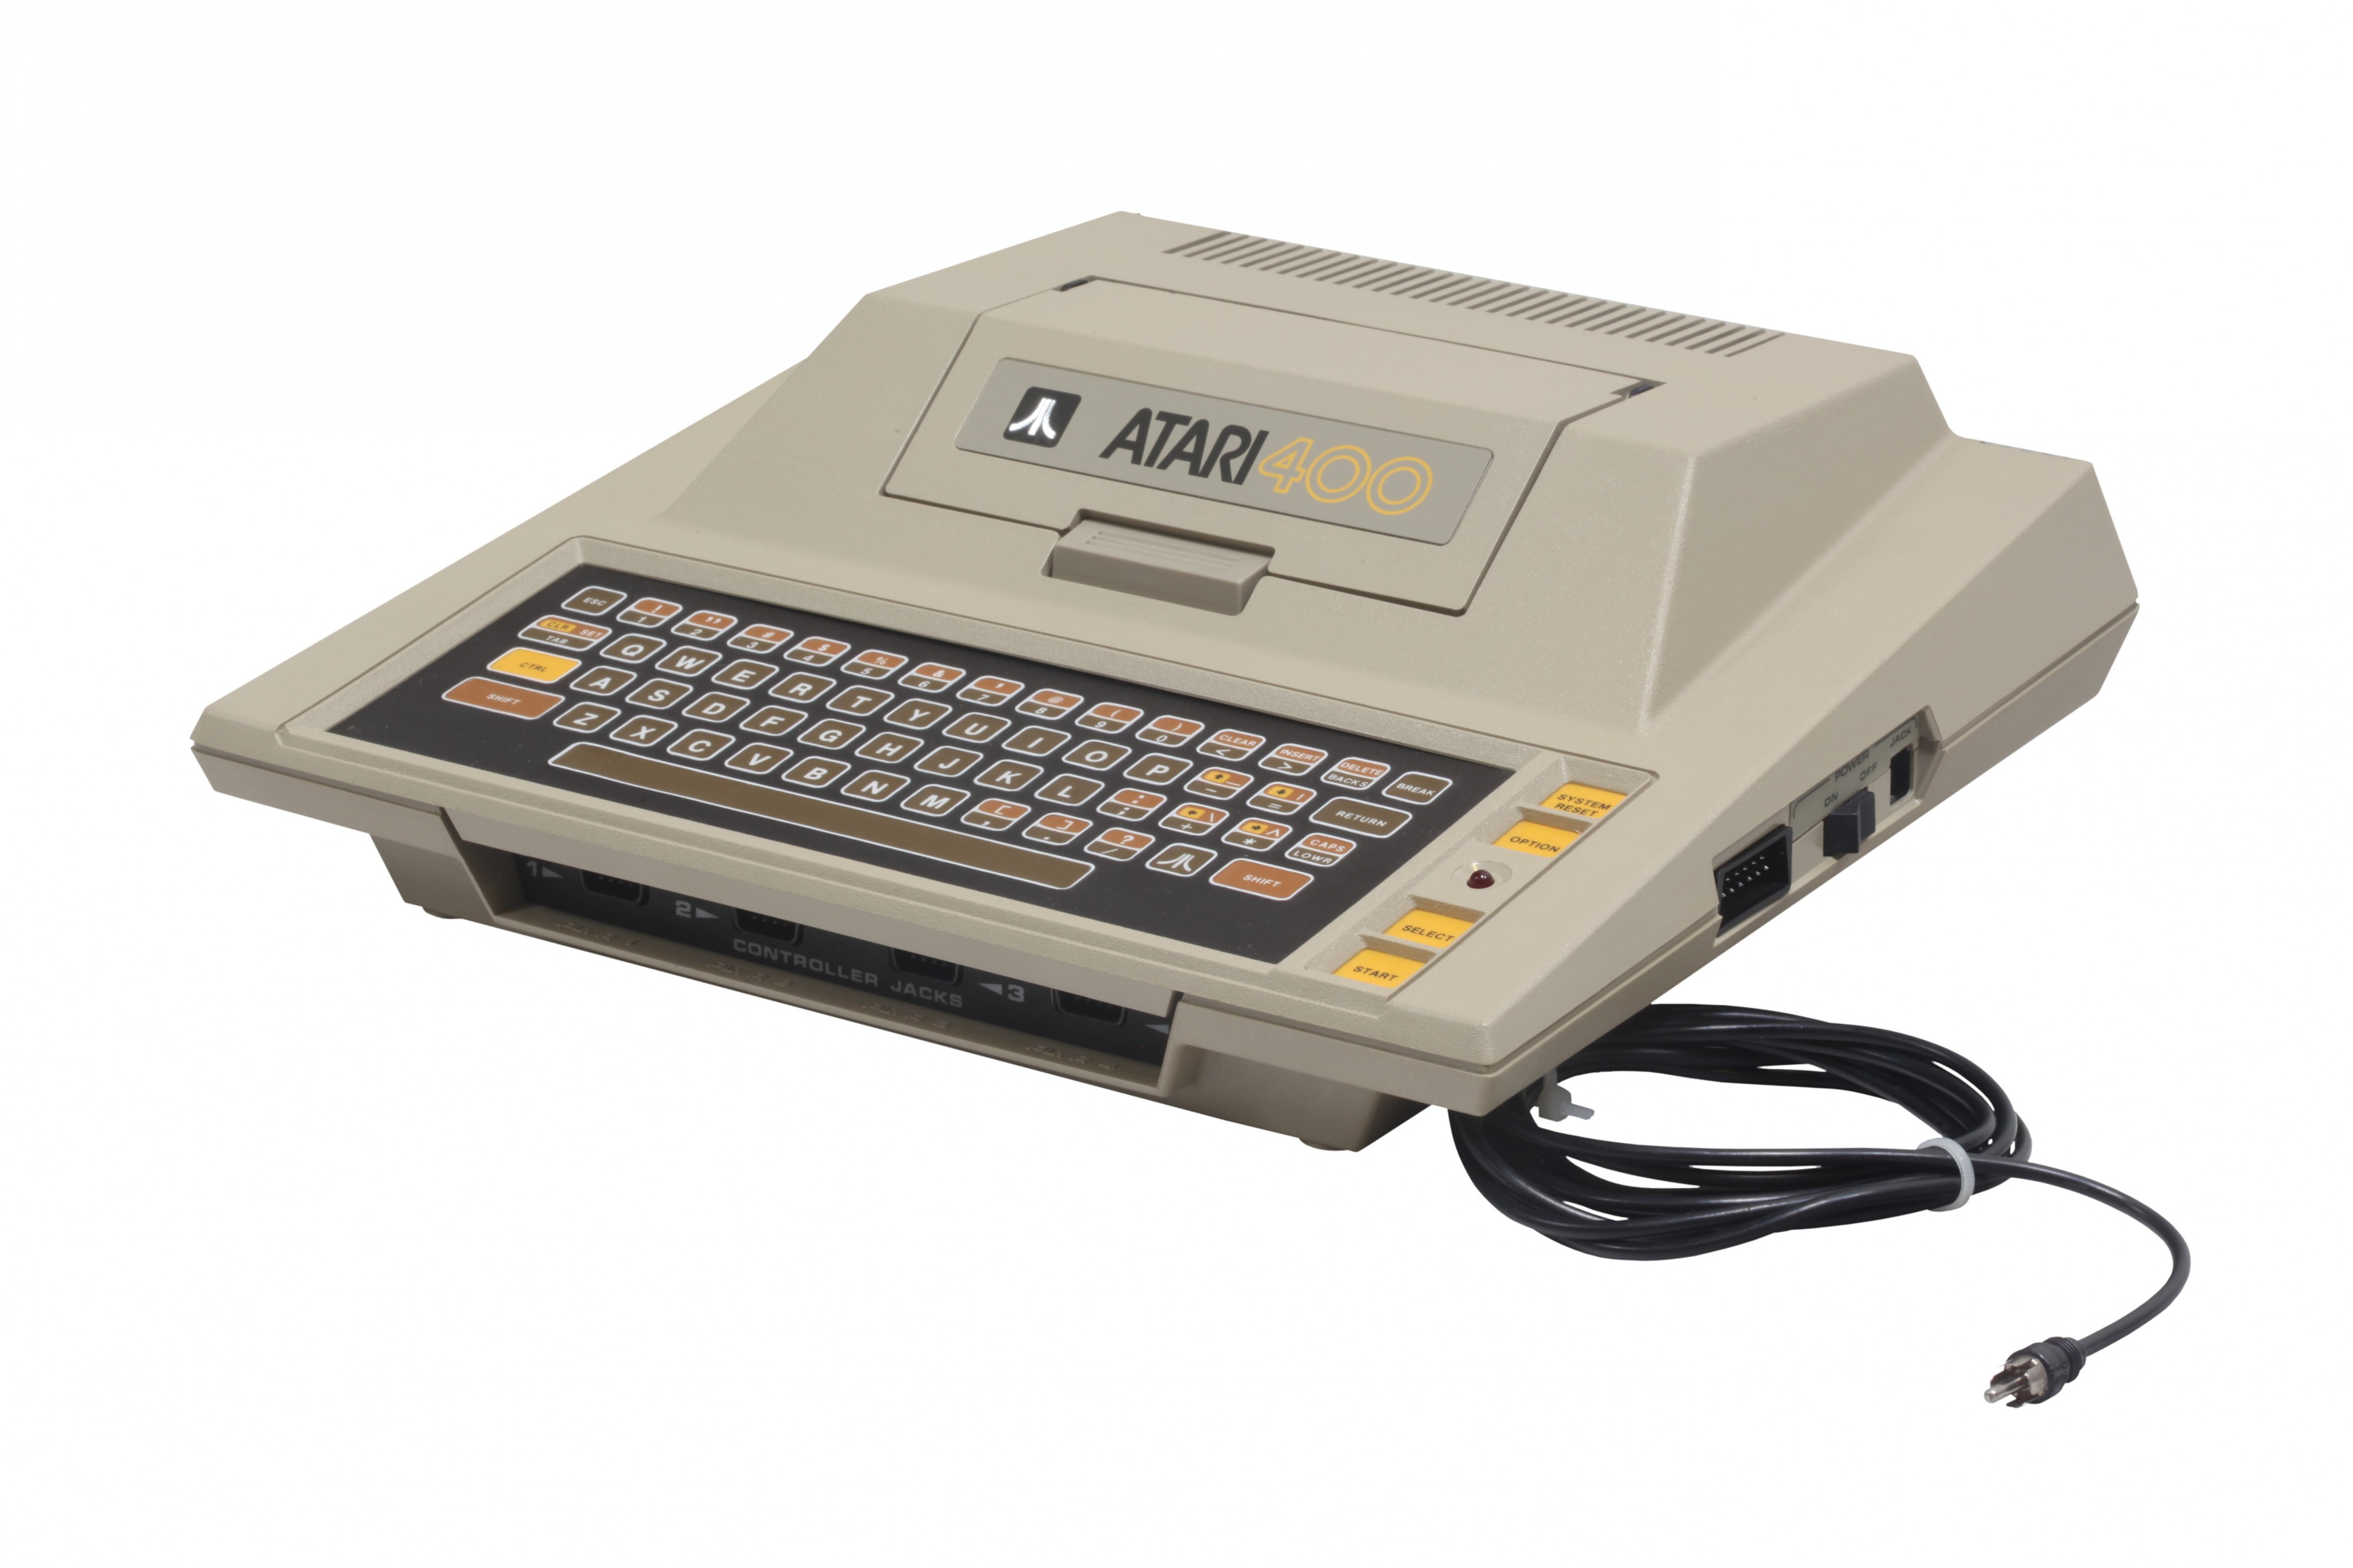 Atari 400-IMG 7254